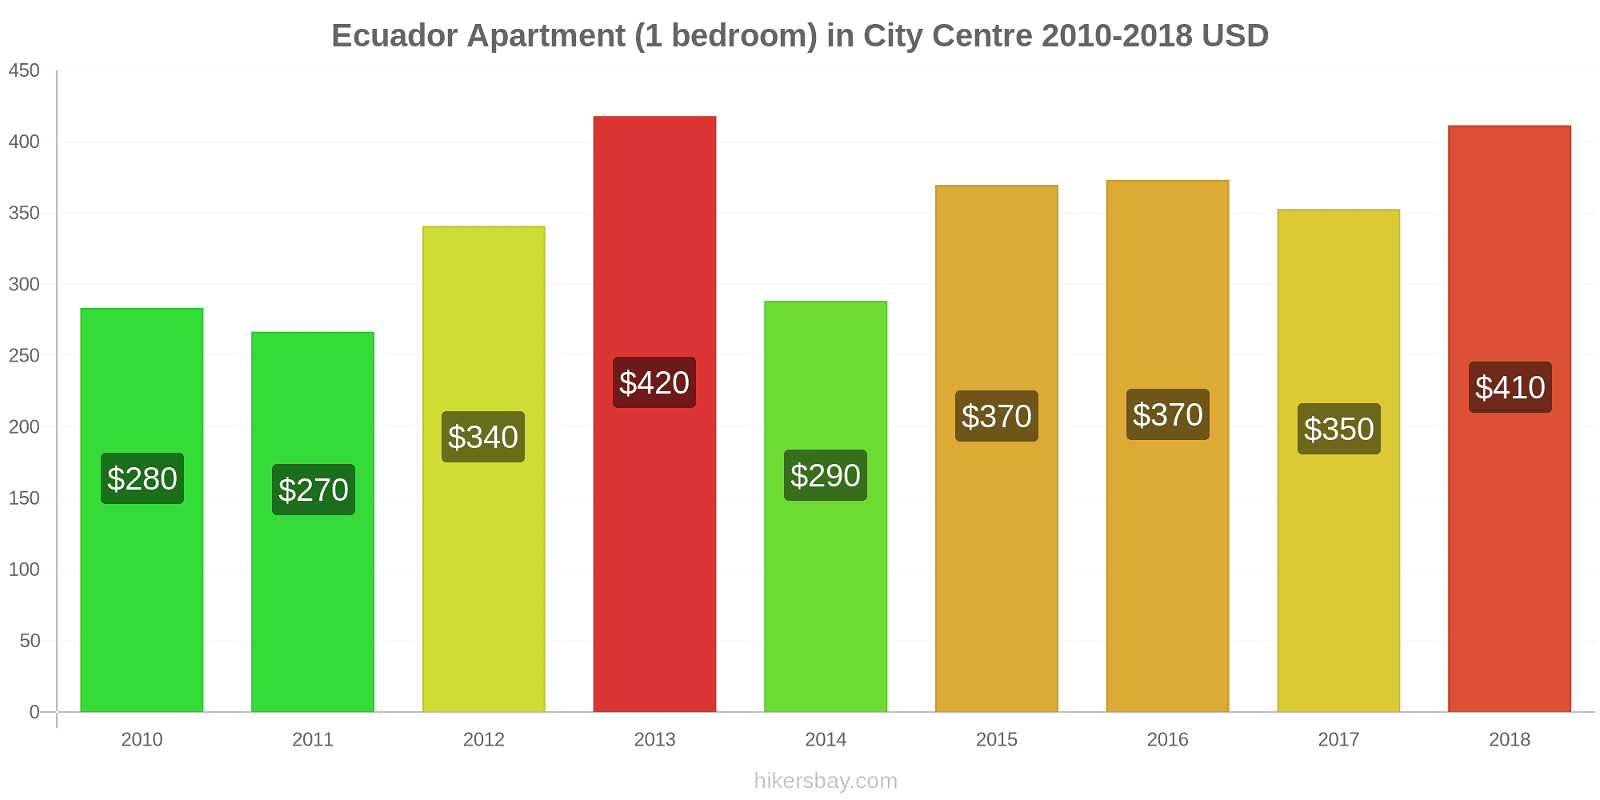 Ecuador price changes Apartment (1 bedroom) in city centre hikersbay.com